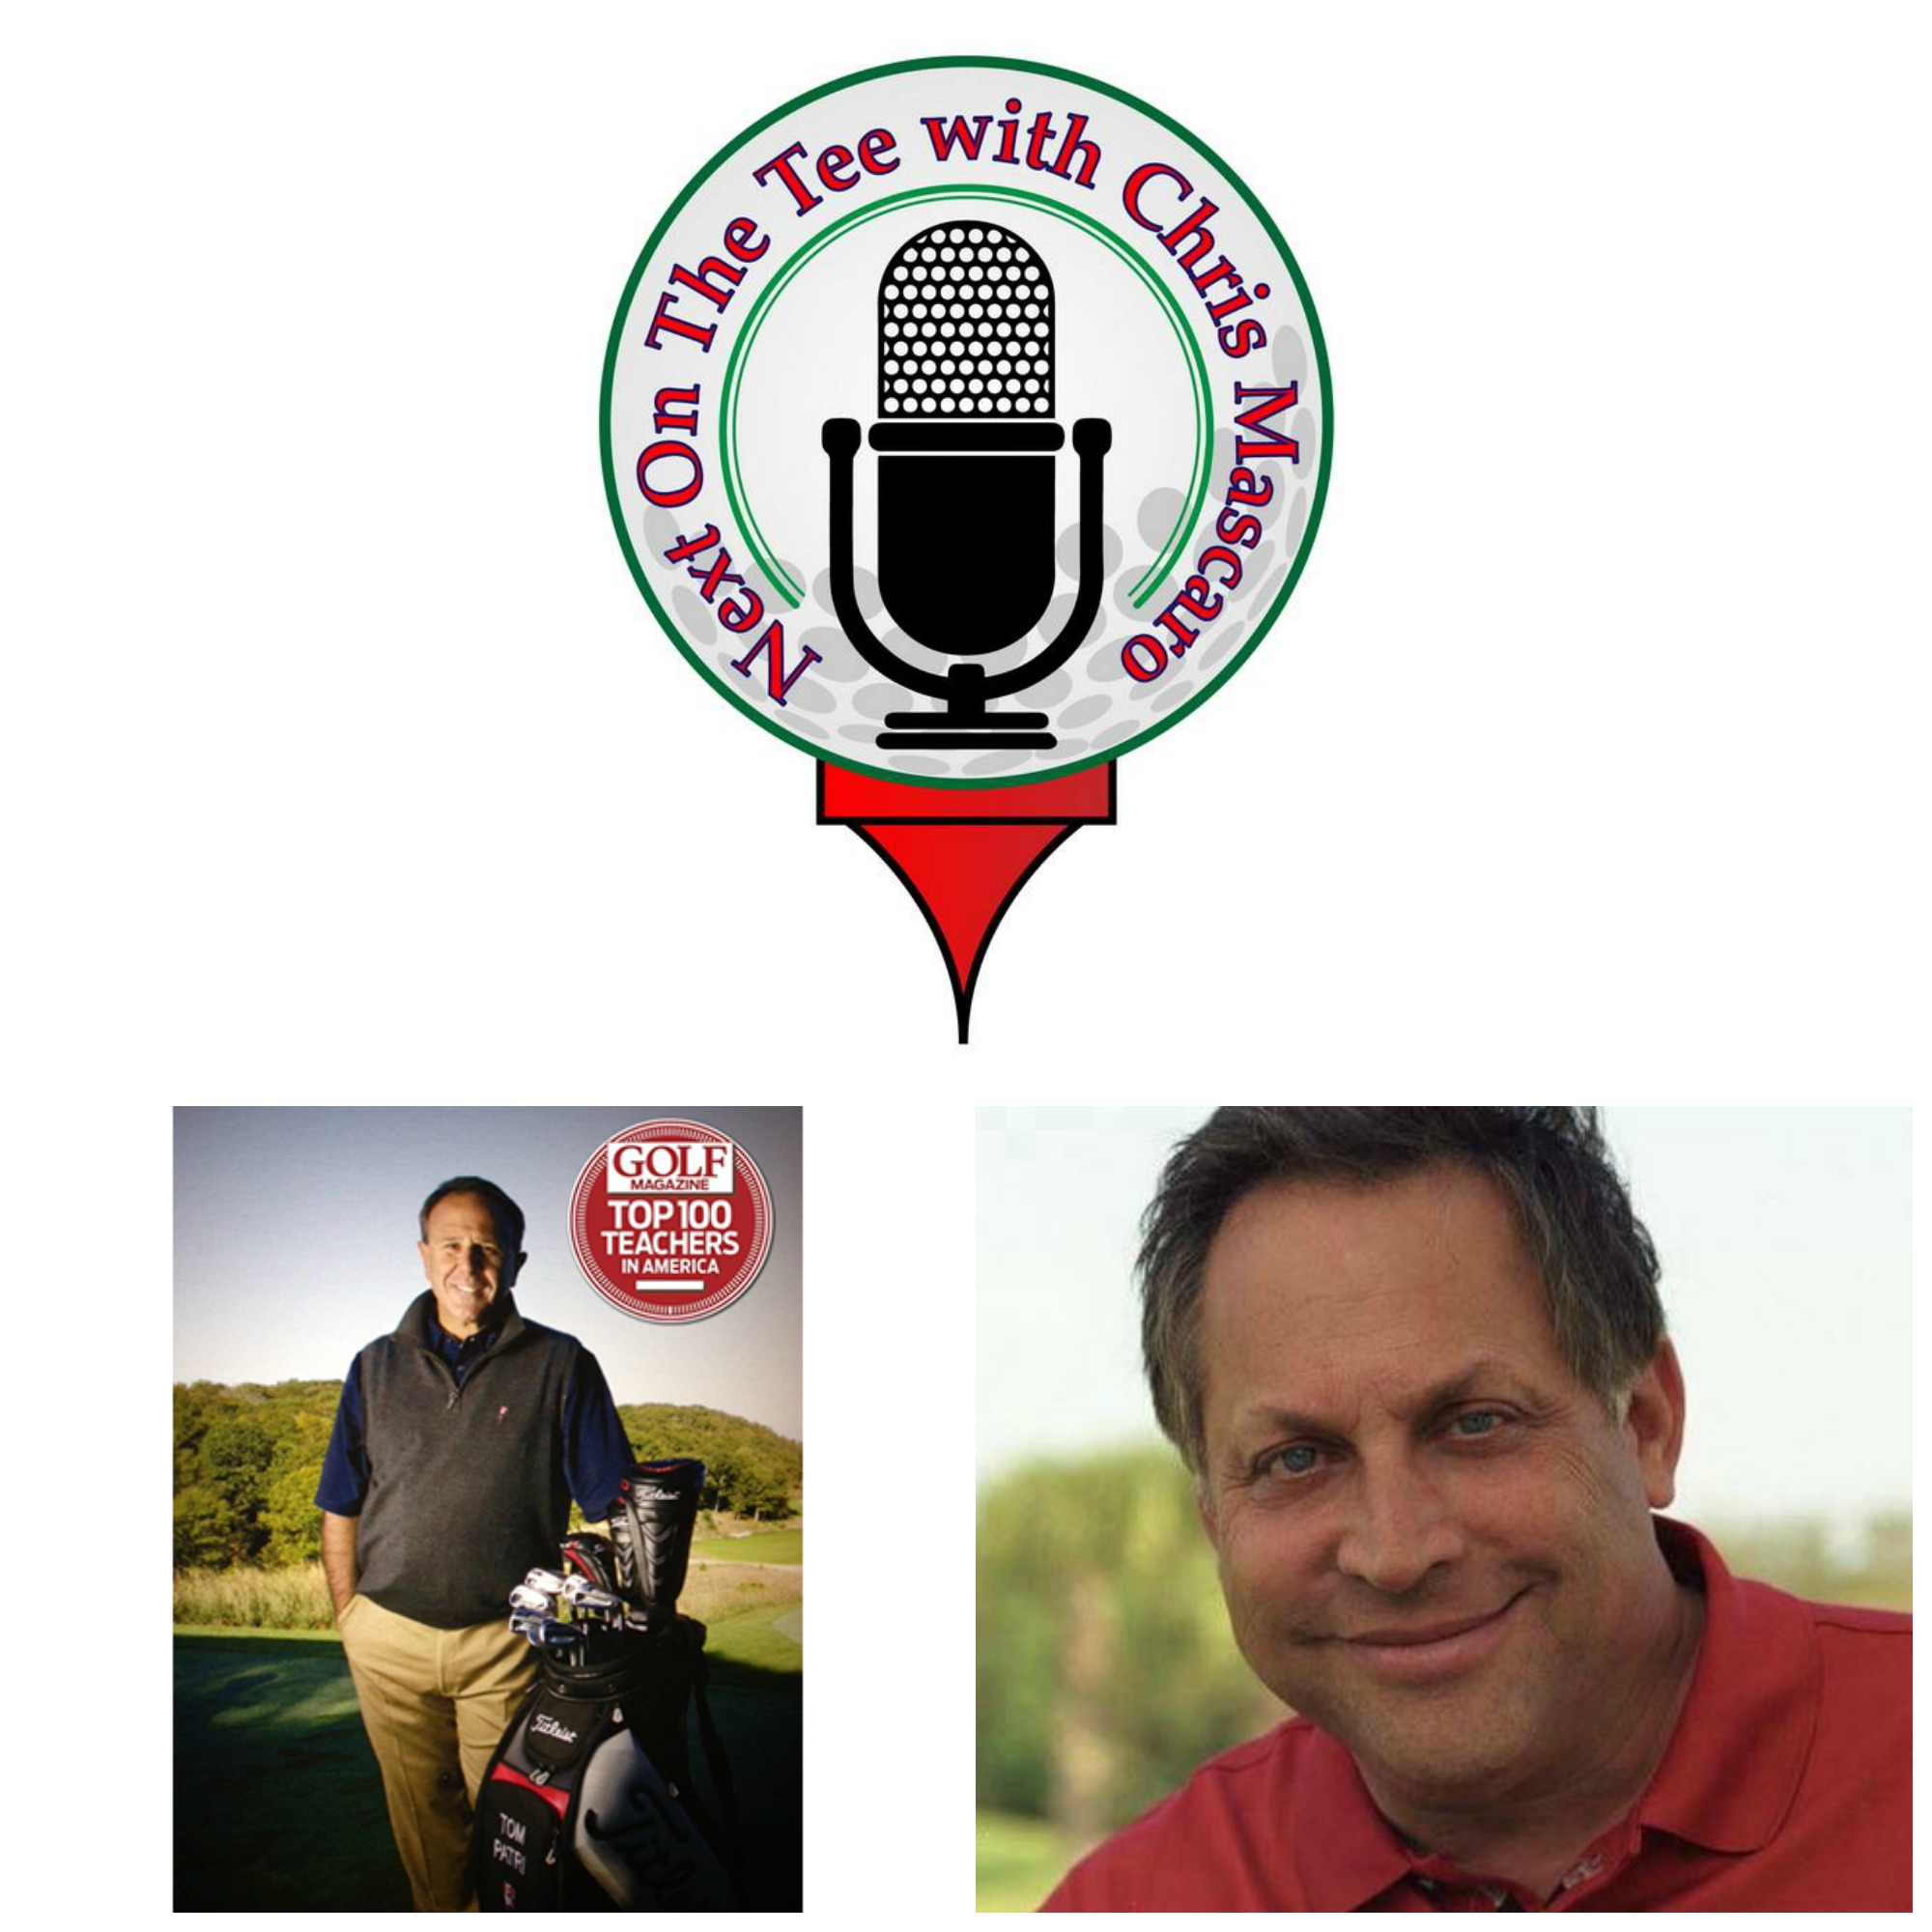 Top 100 Instructor Tom Patri & The Voice of Golf Peter Kessler